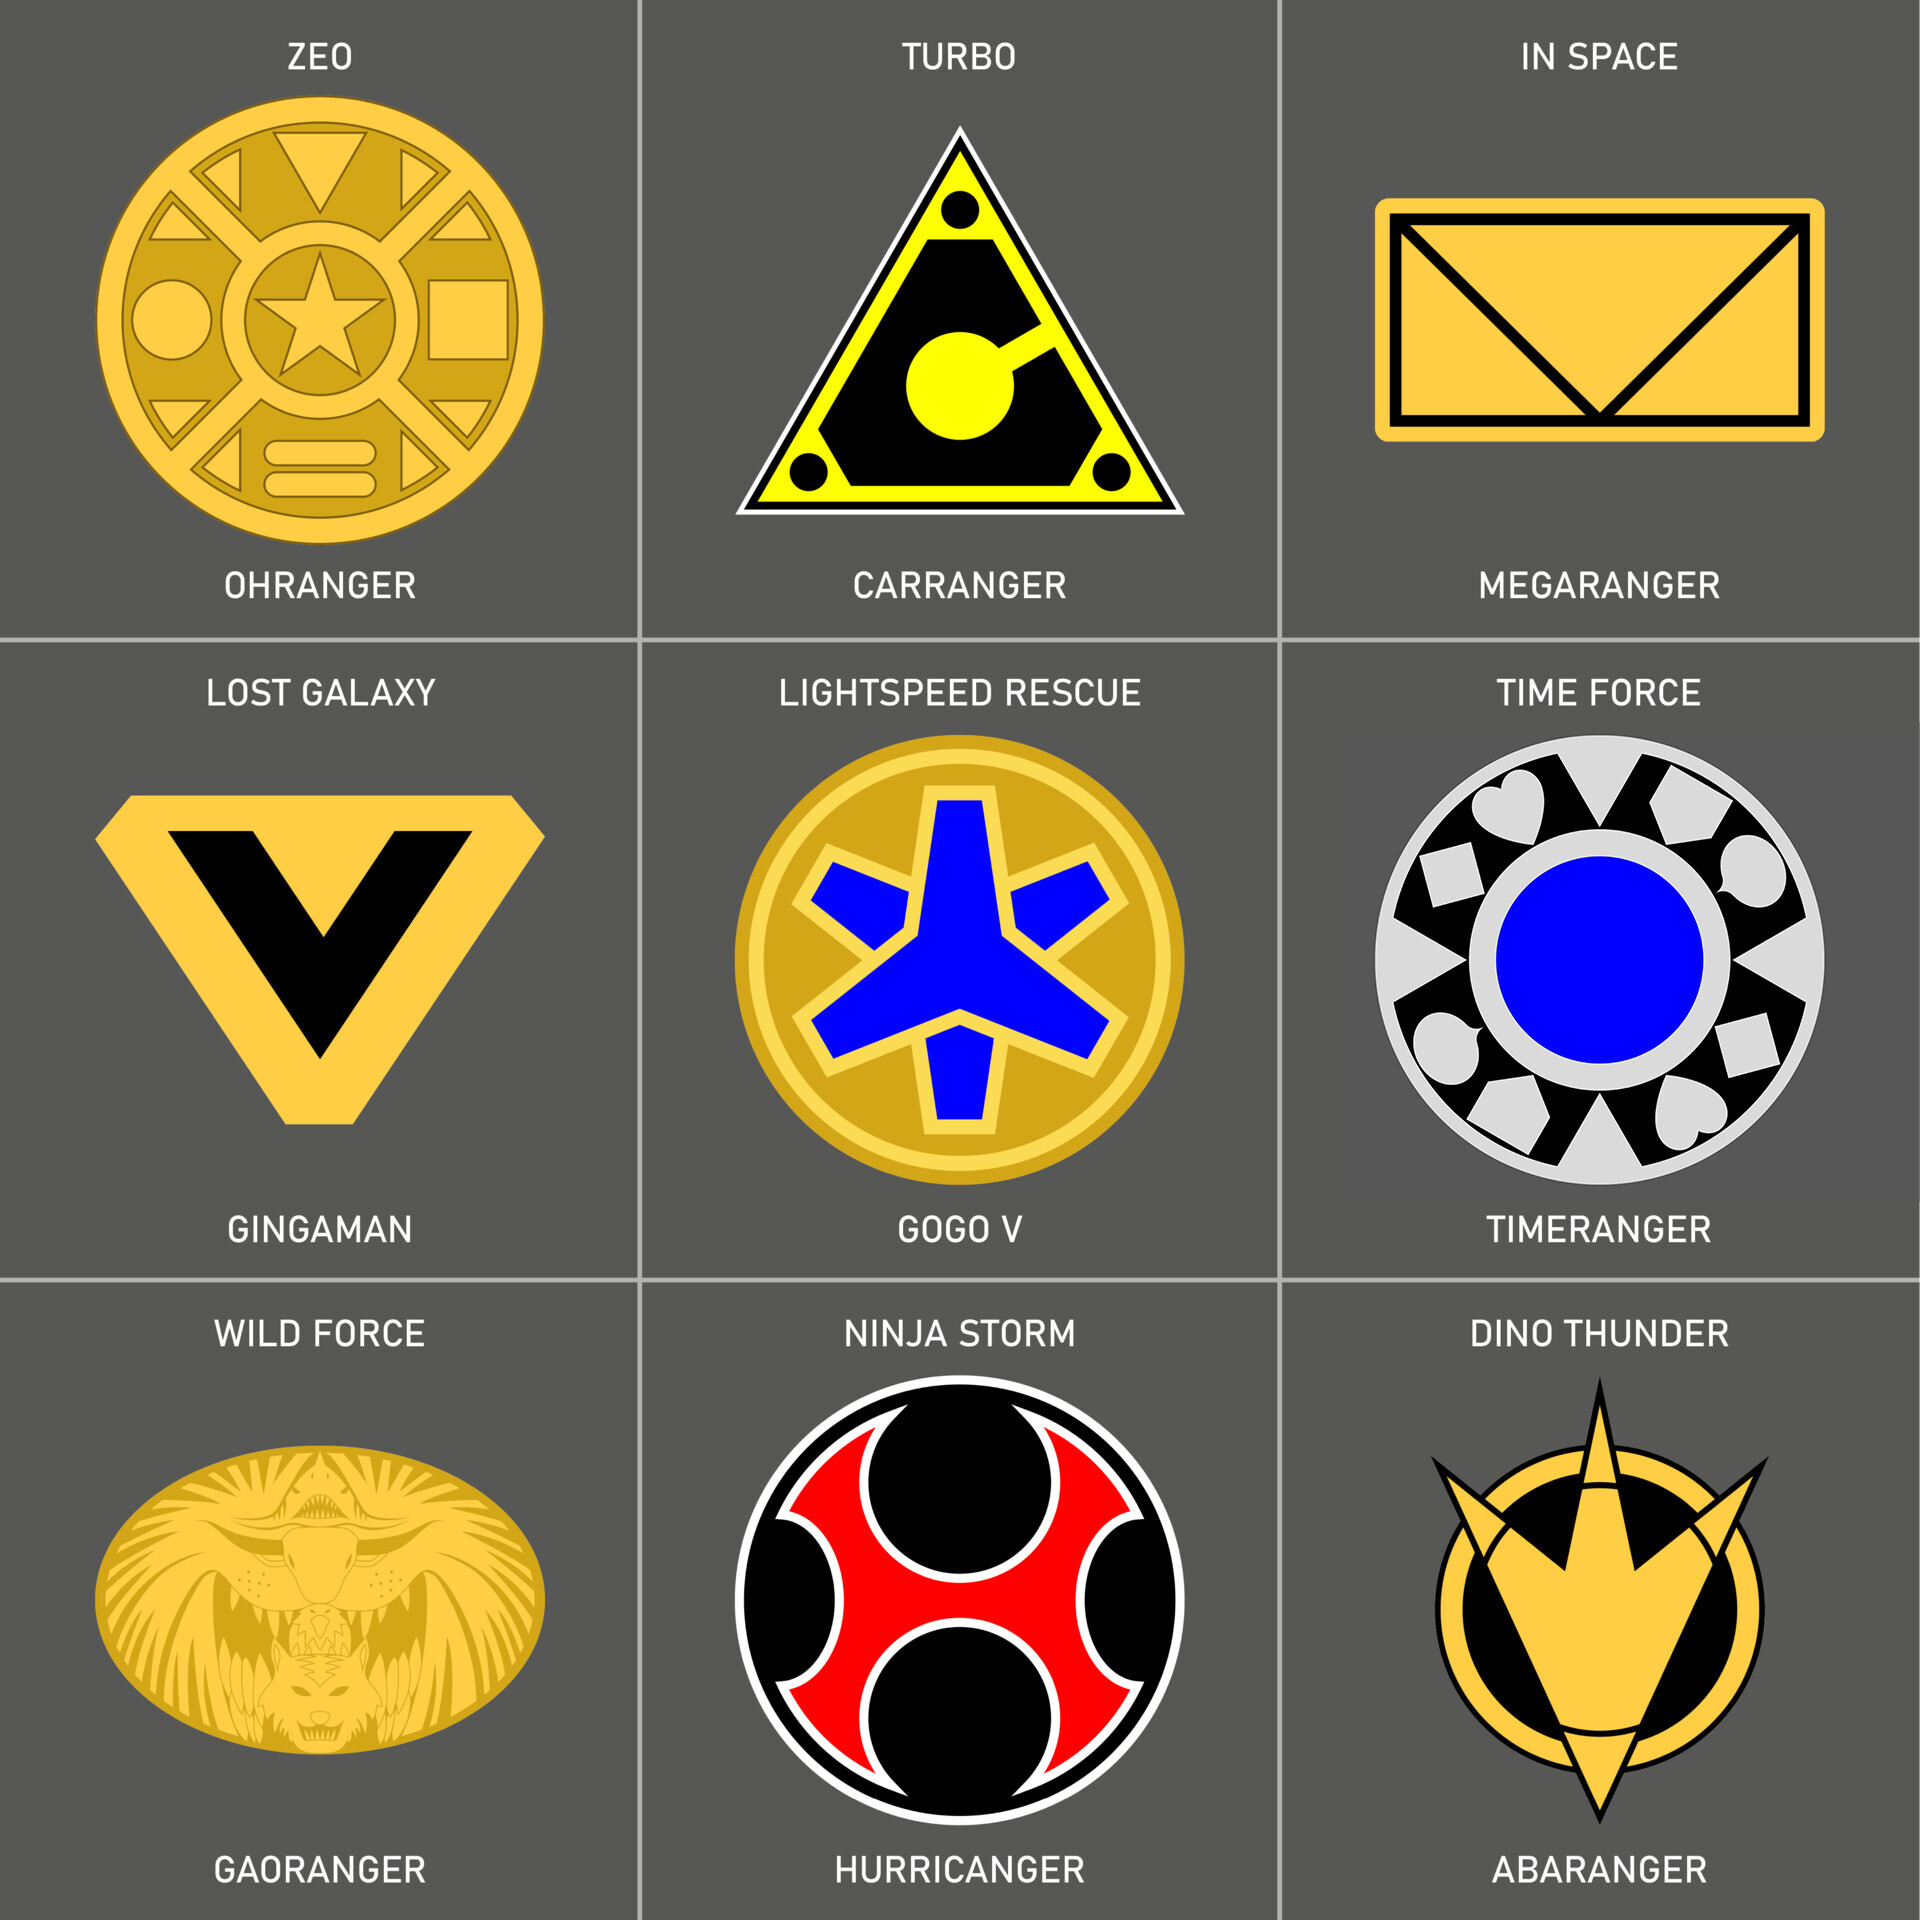 Power Rangers Megaforce Symbols